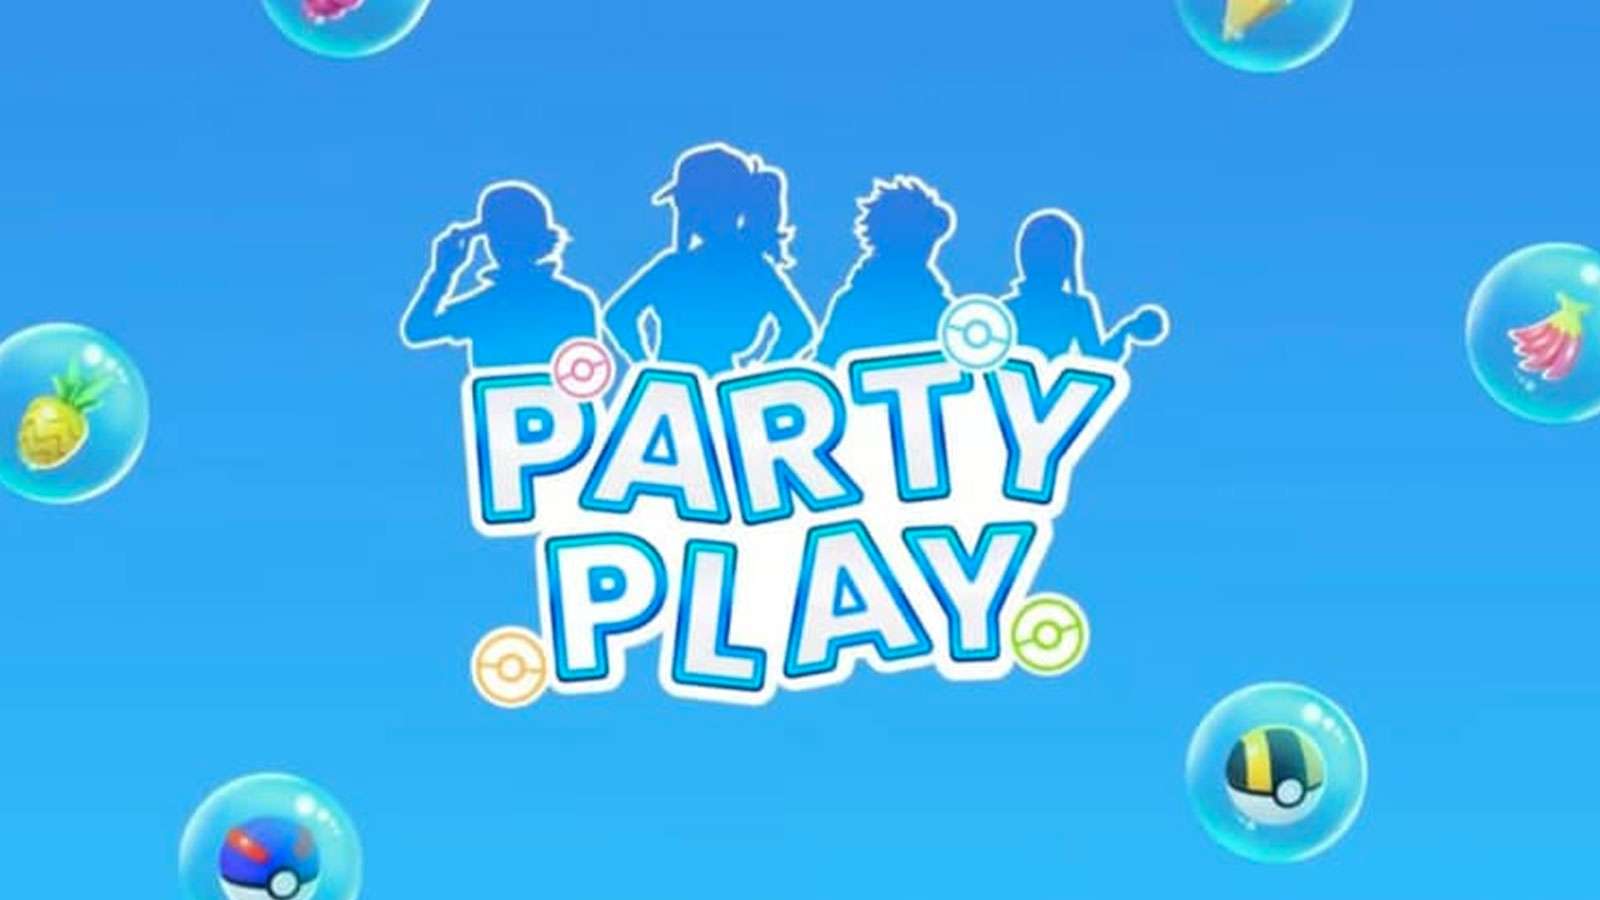 Le mode Party Play de Pokémon Go